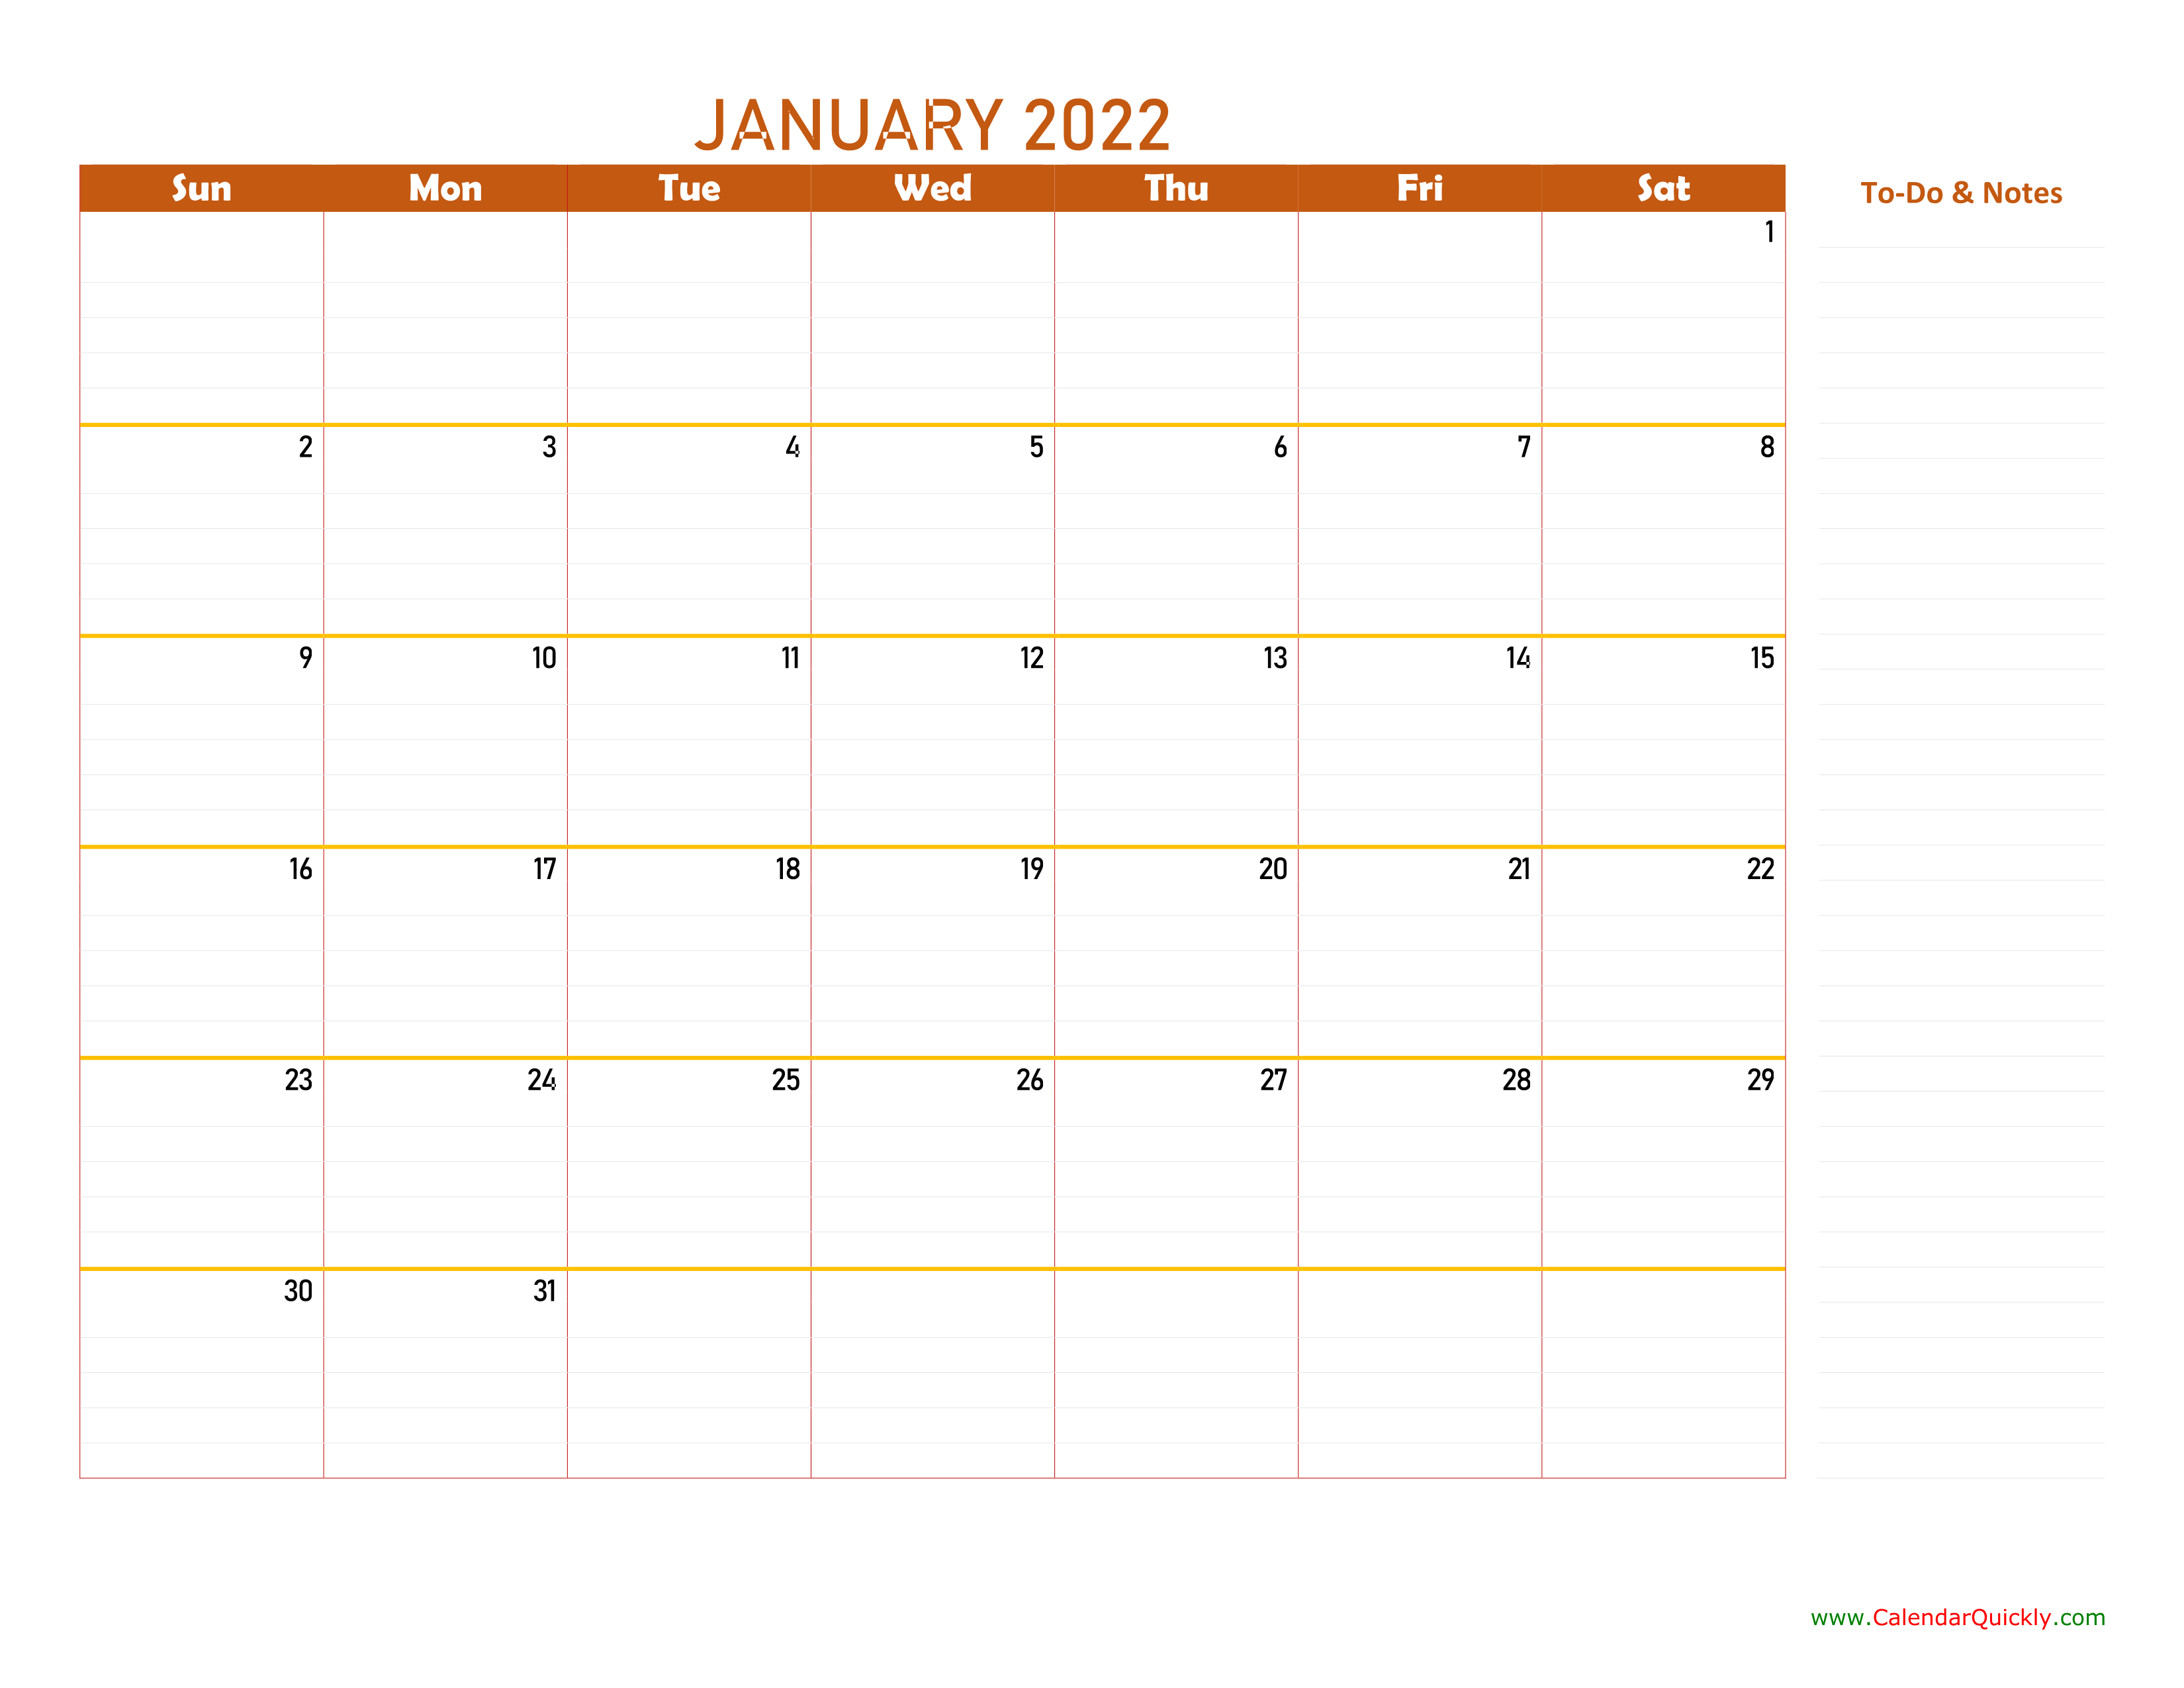 excel calendar 2022 download